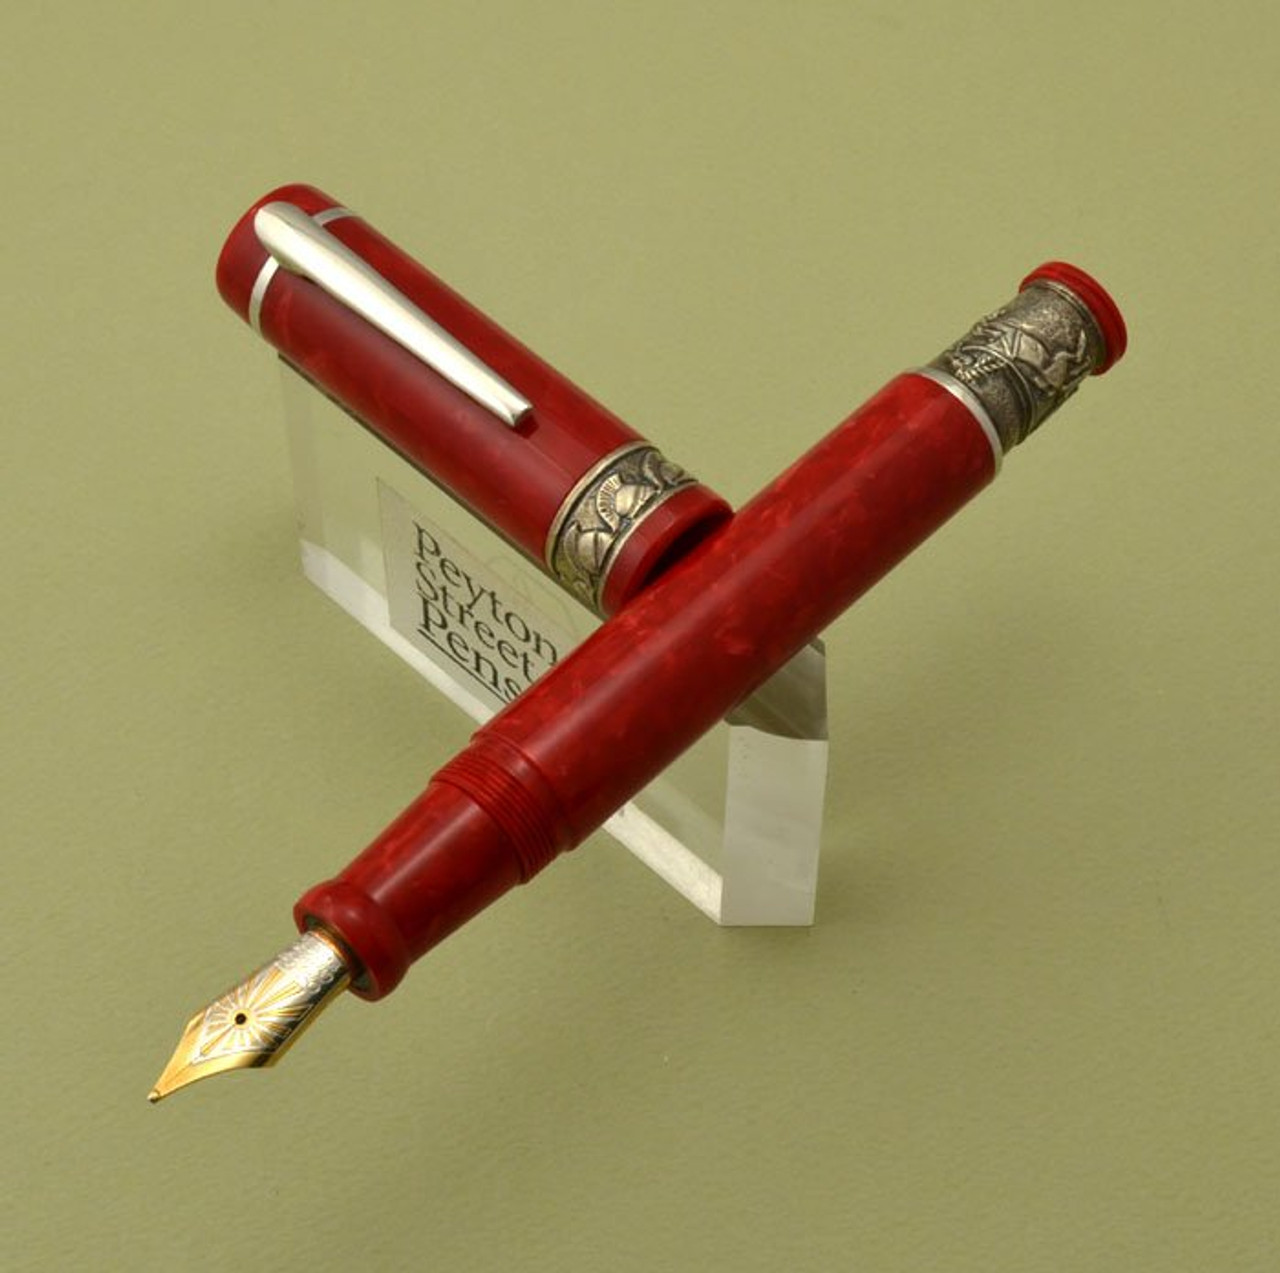 Delta Julius Caesar Ltd Ed Fountain Pen - Cartridge/Converter Version, 18k Broad Nib (Mint)